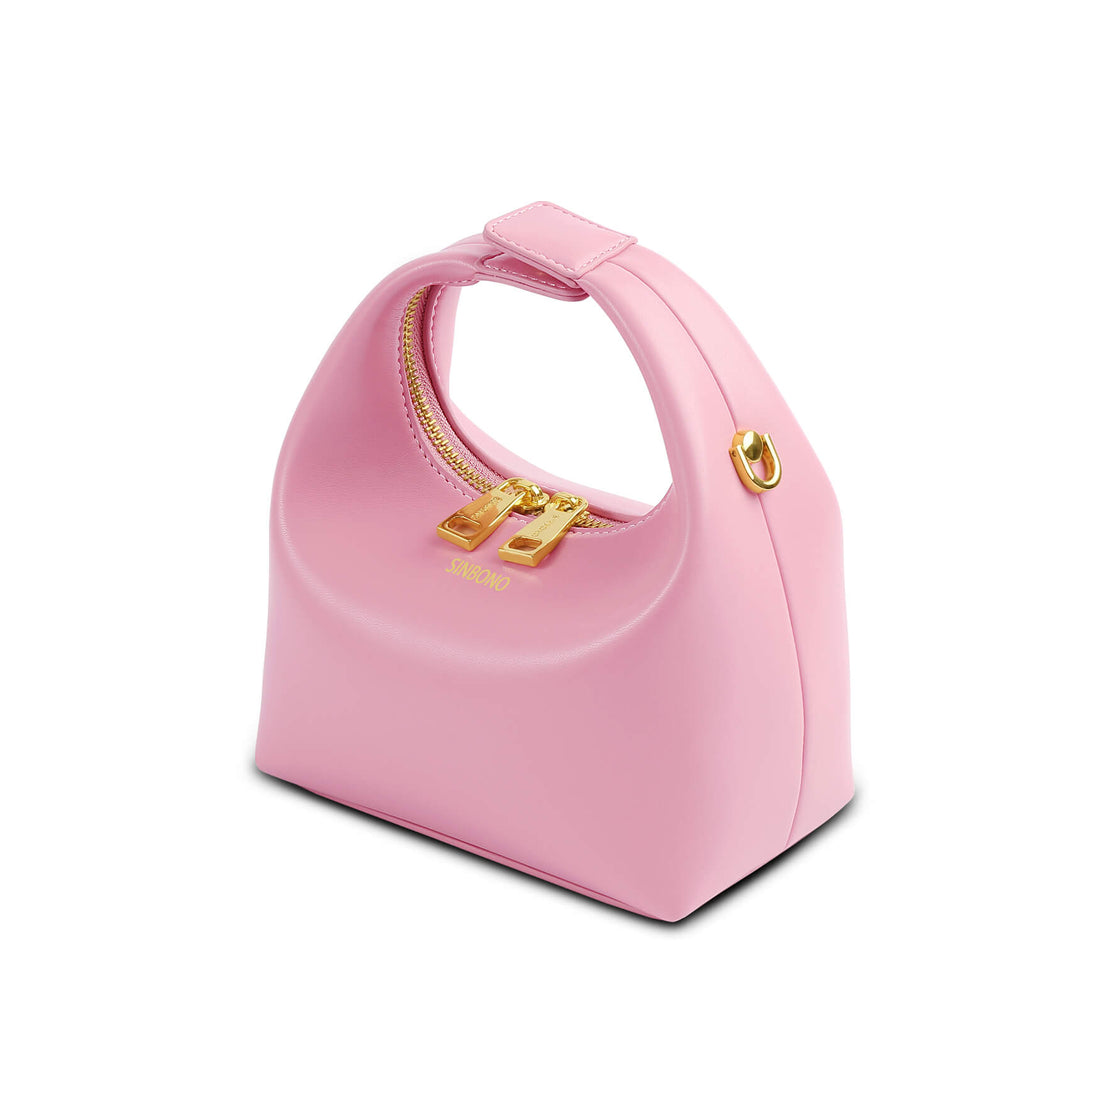 Buy Kompanero Pink Genuine Leather Slingbag (B-9150-ROSE) at